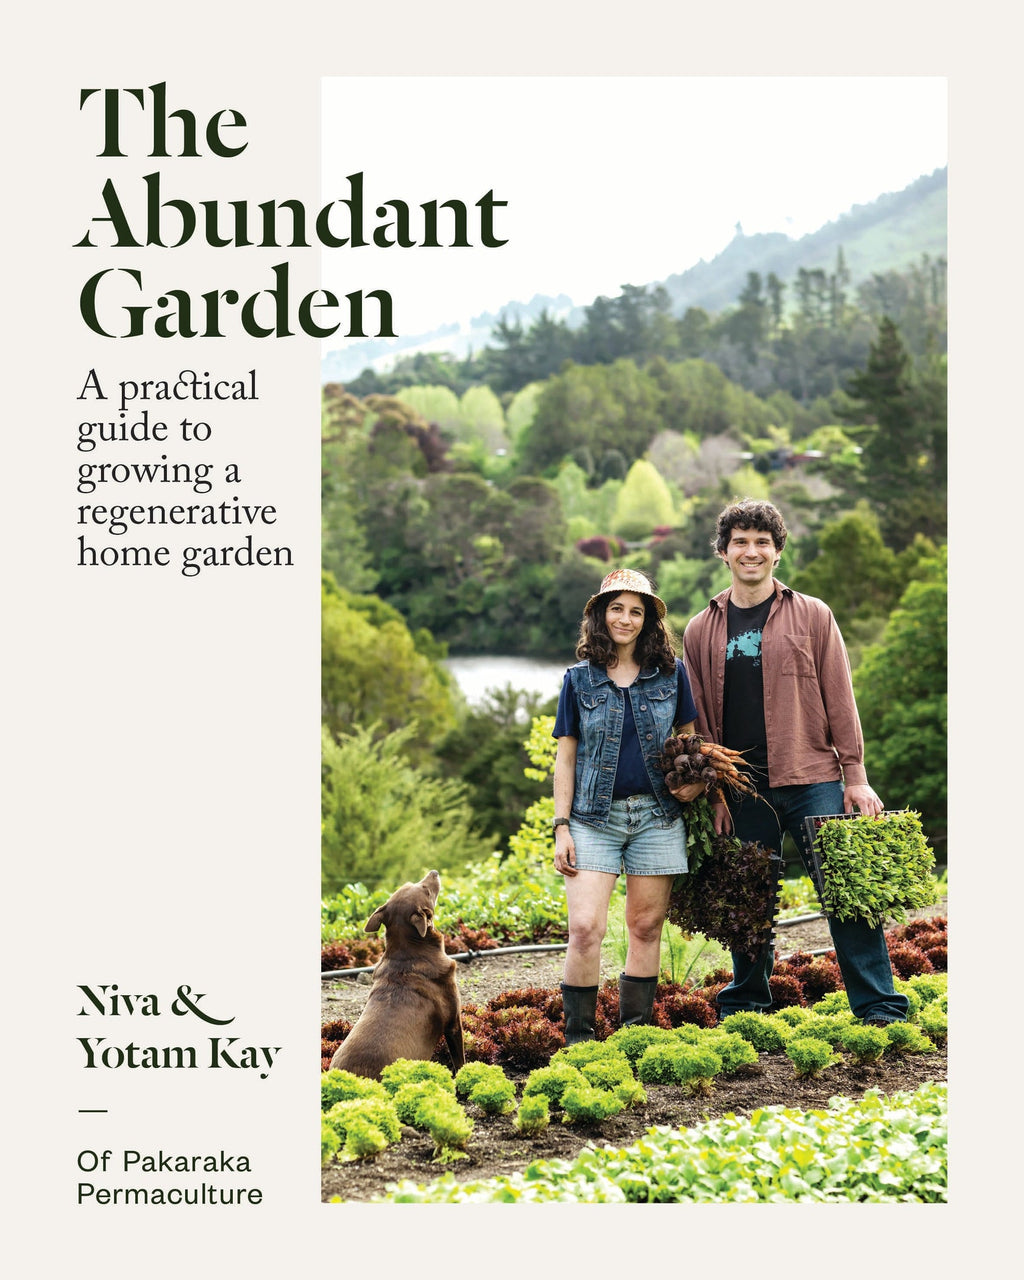 The Abundant Garden - Niva Kay and Yotam Kay